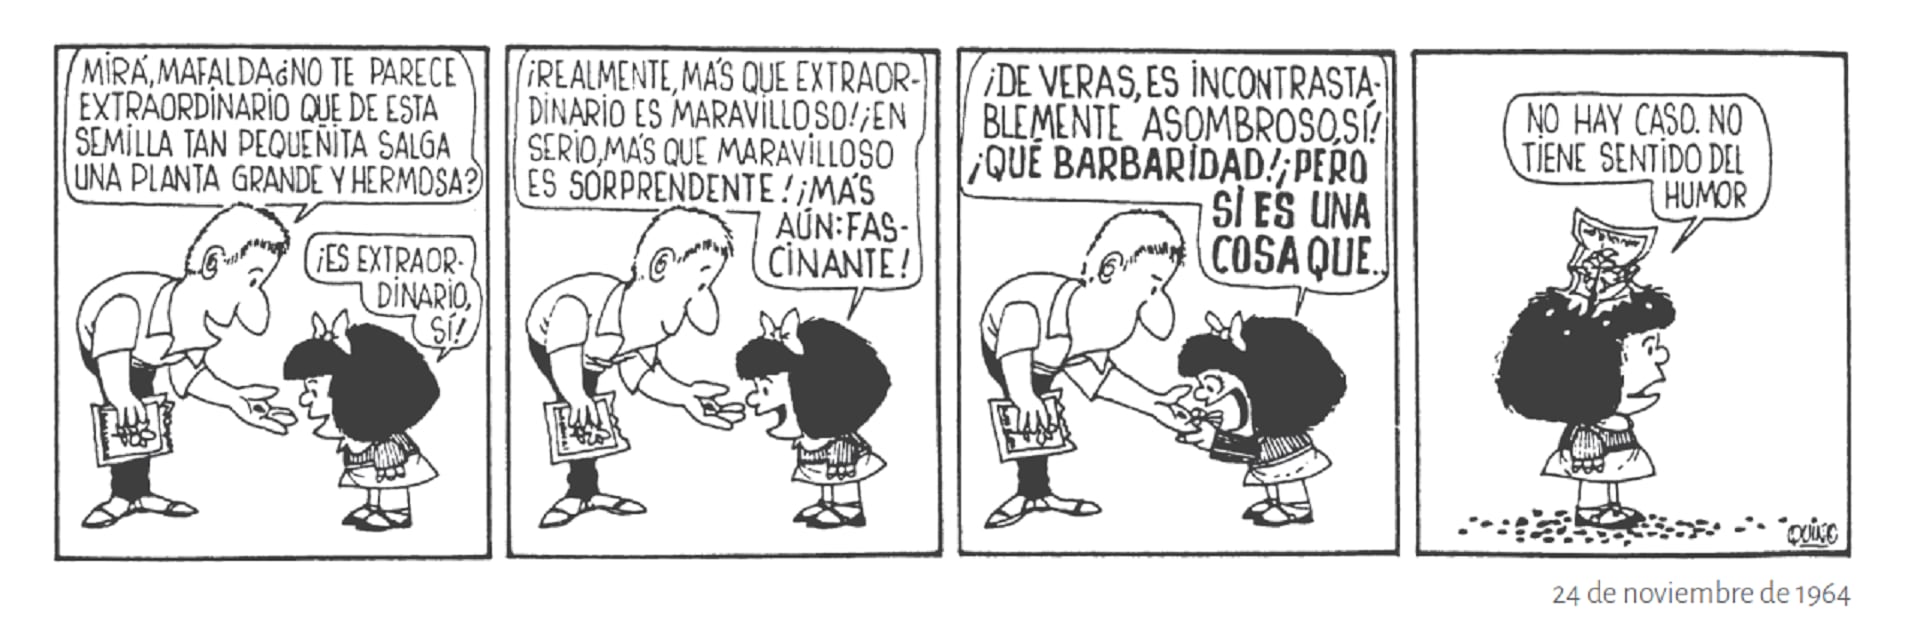 (Imagen: “Universo Mafalda”)